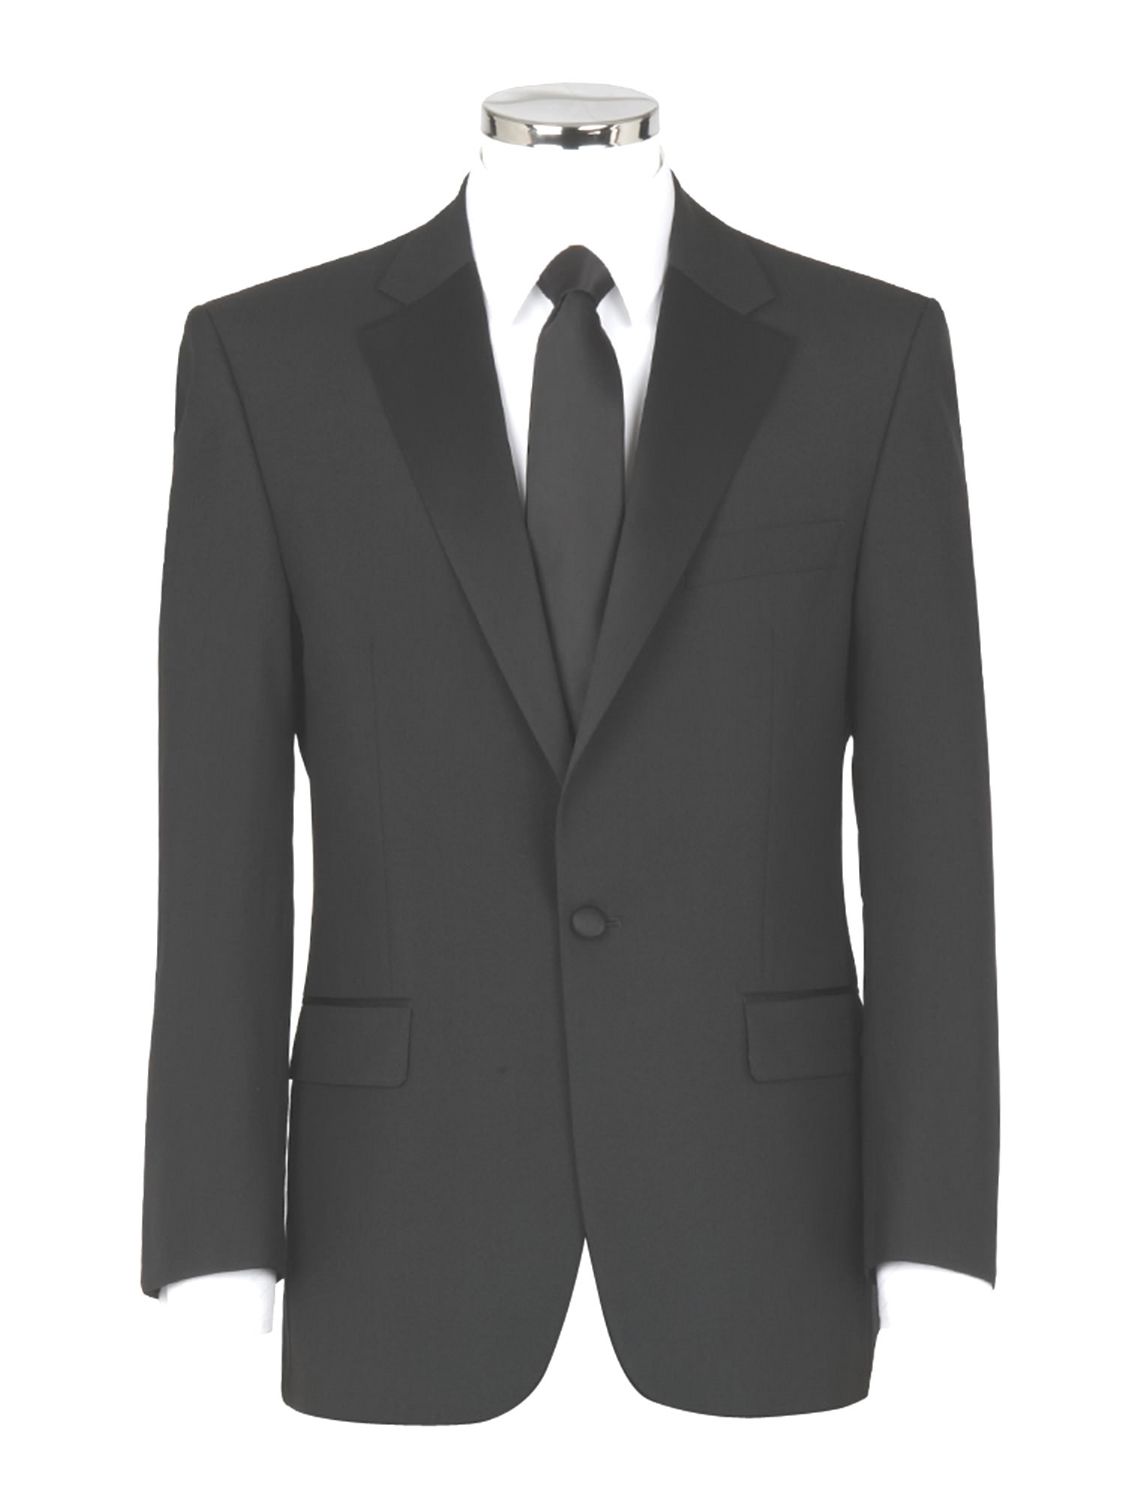 Scott Dinner Suit Jacket SS1541J1 size 40S